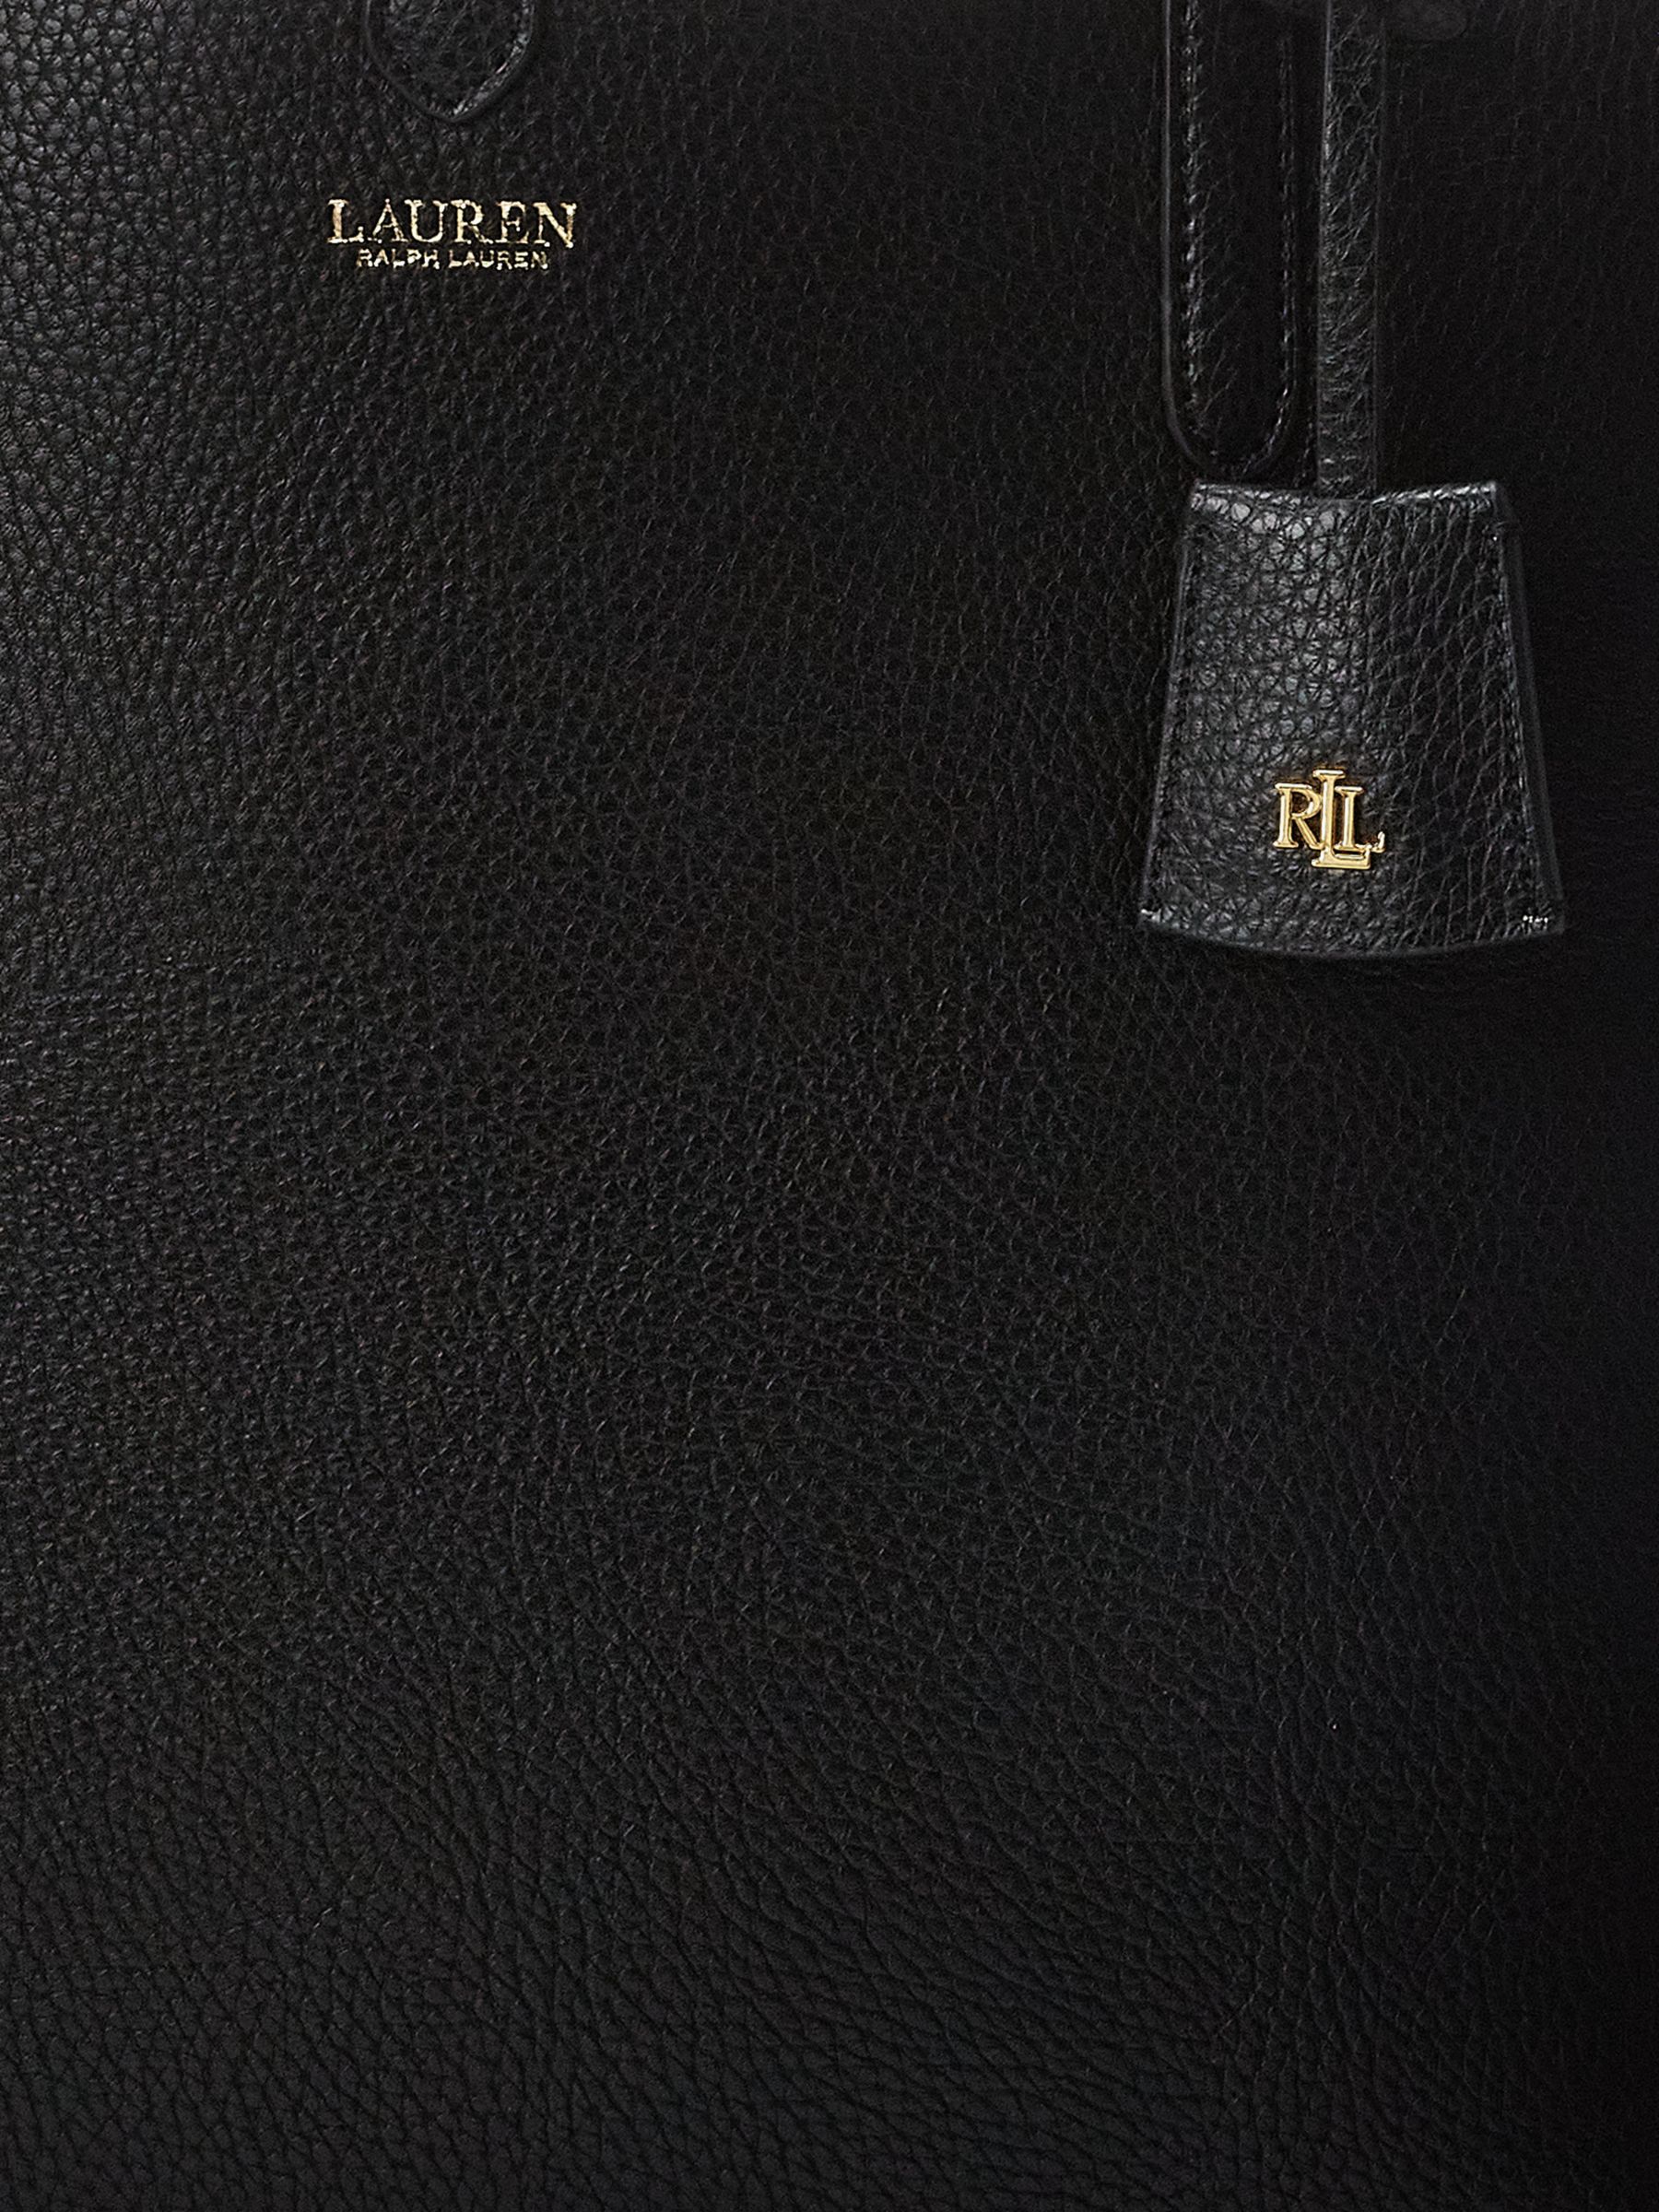 Lauren Ralph Lauren Reversible Tote Bag, Black/Taupe